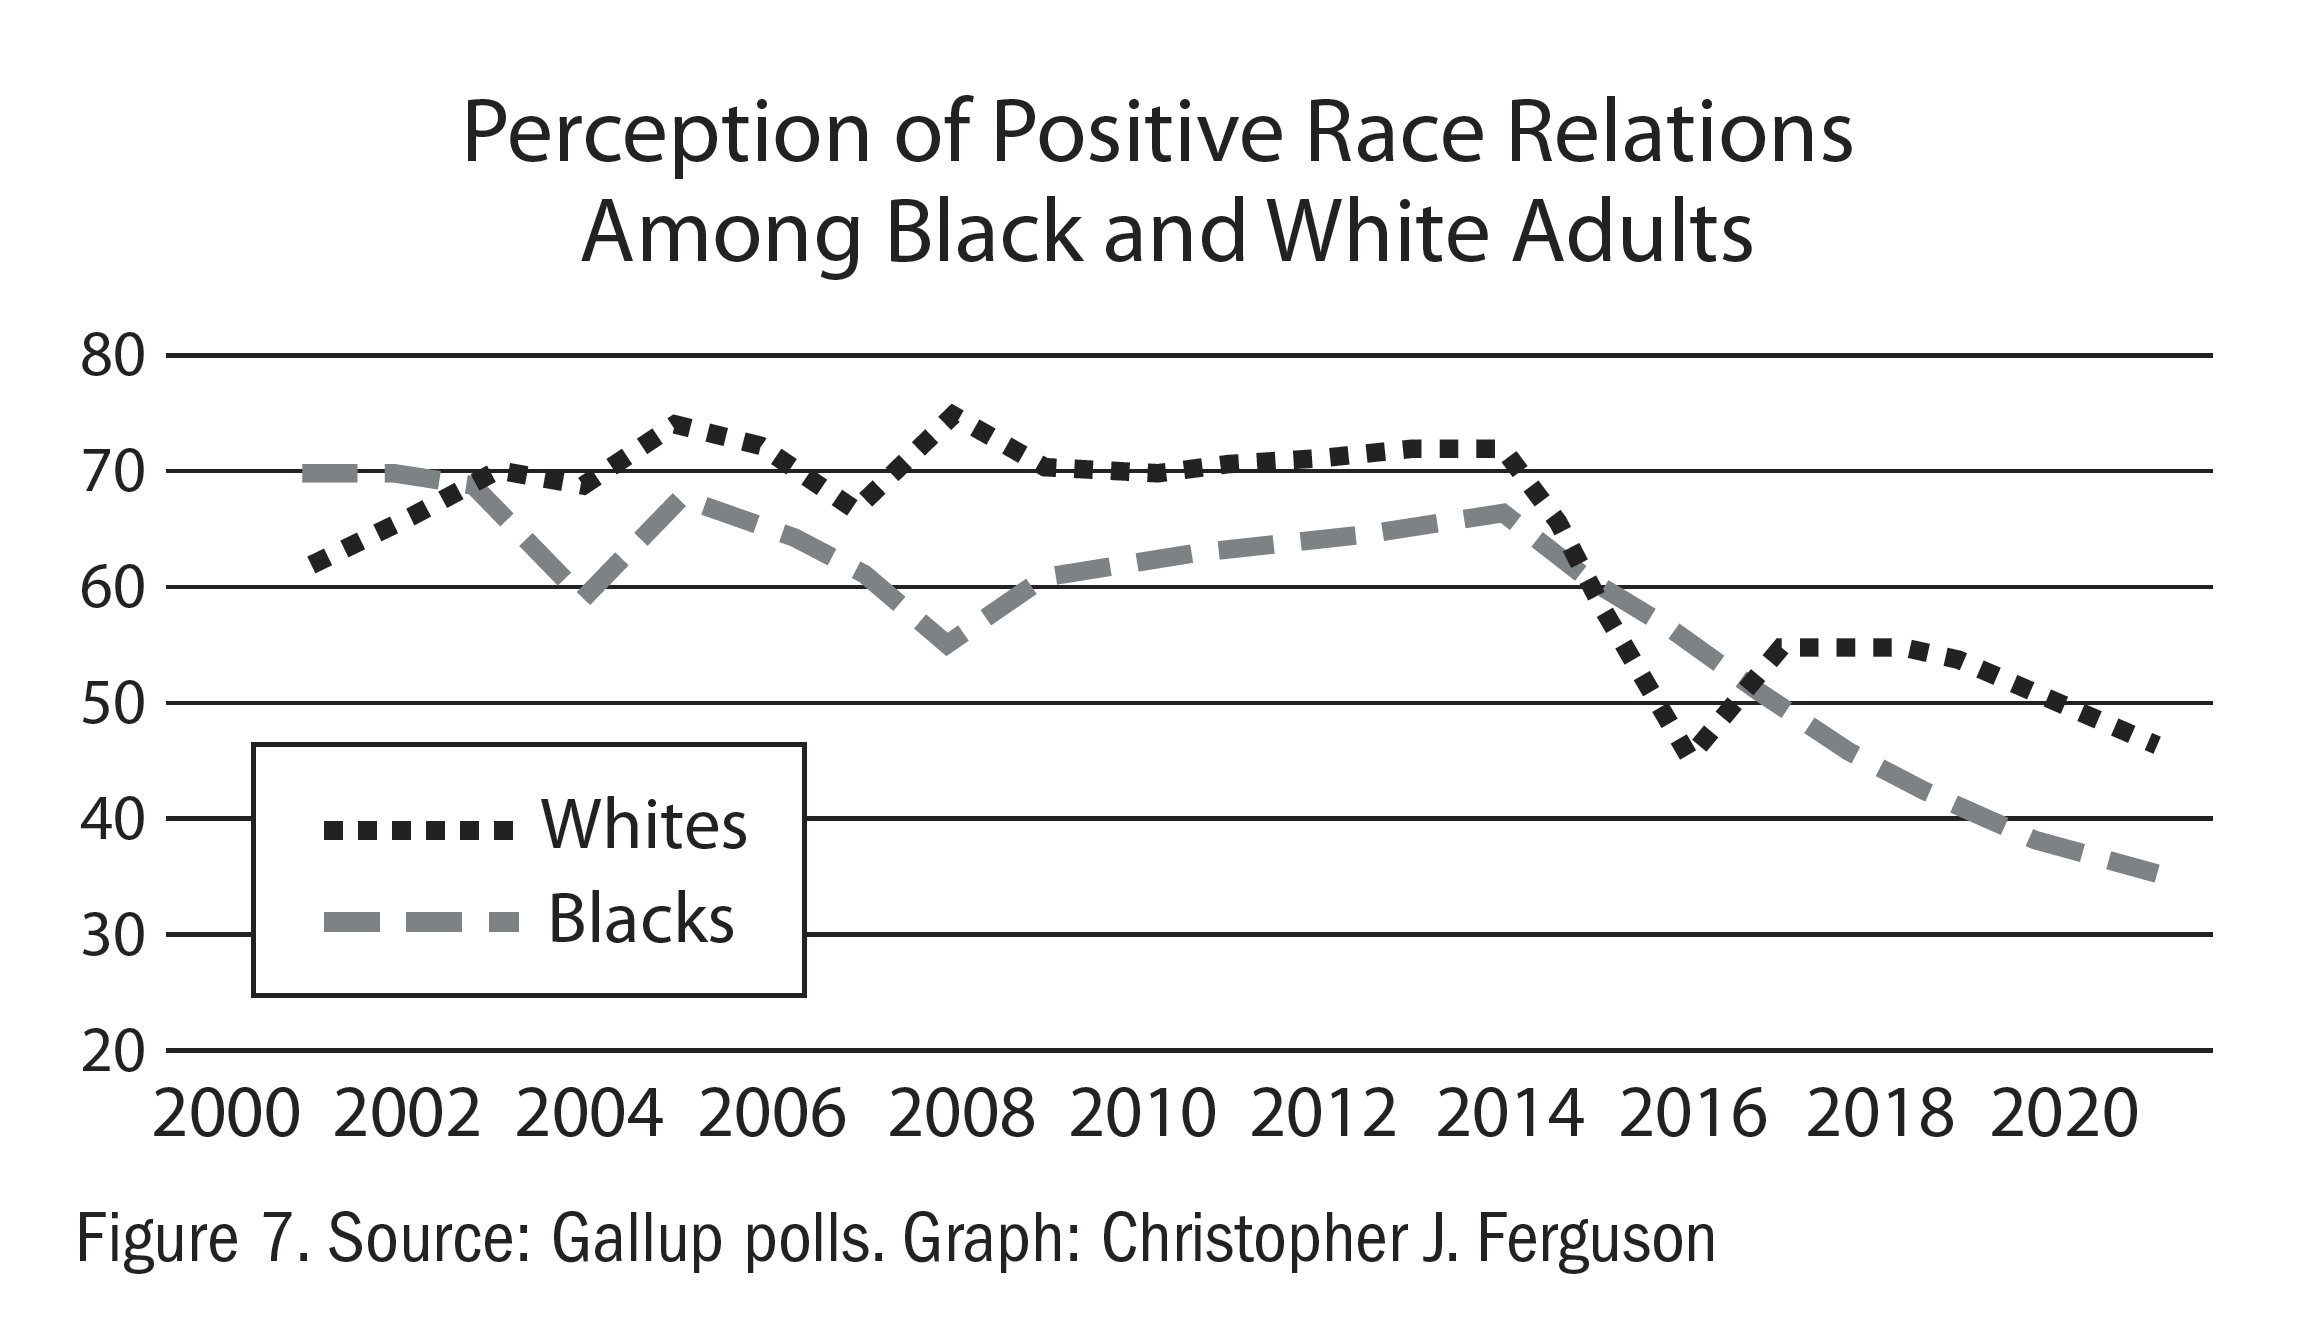 Figure 7: Source: Gallup polls. Graph: Christopher J. Ferguson